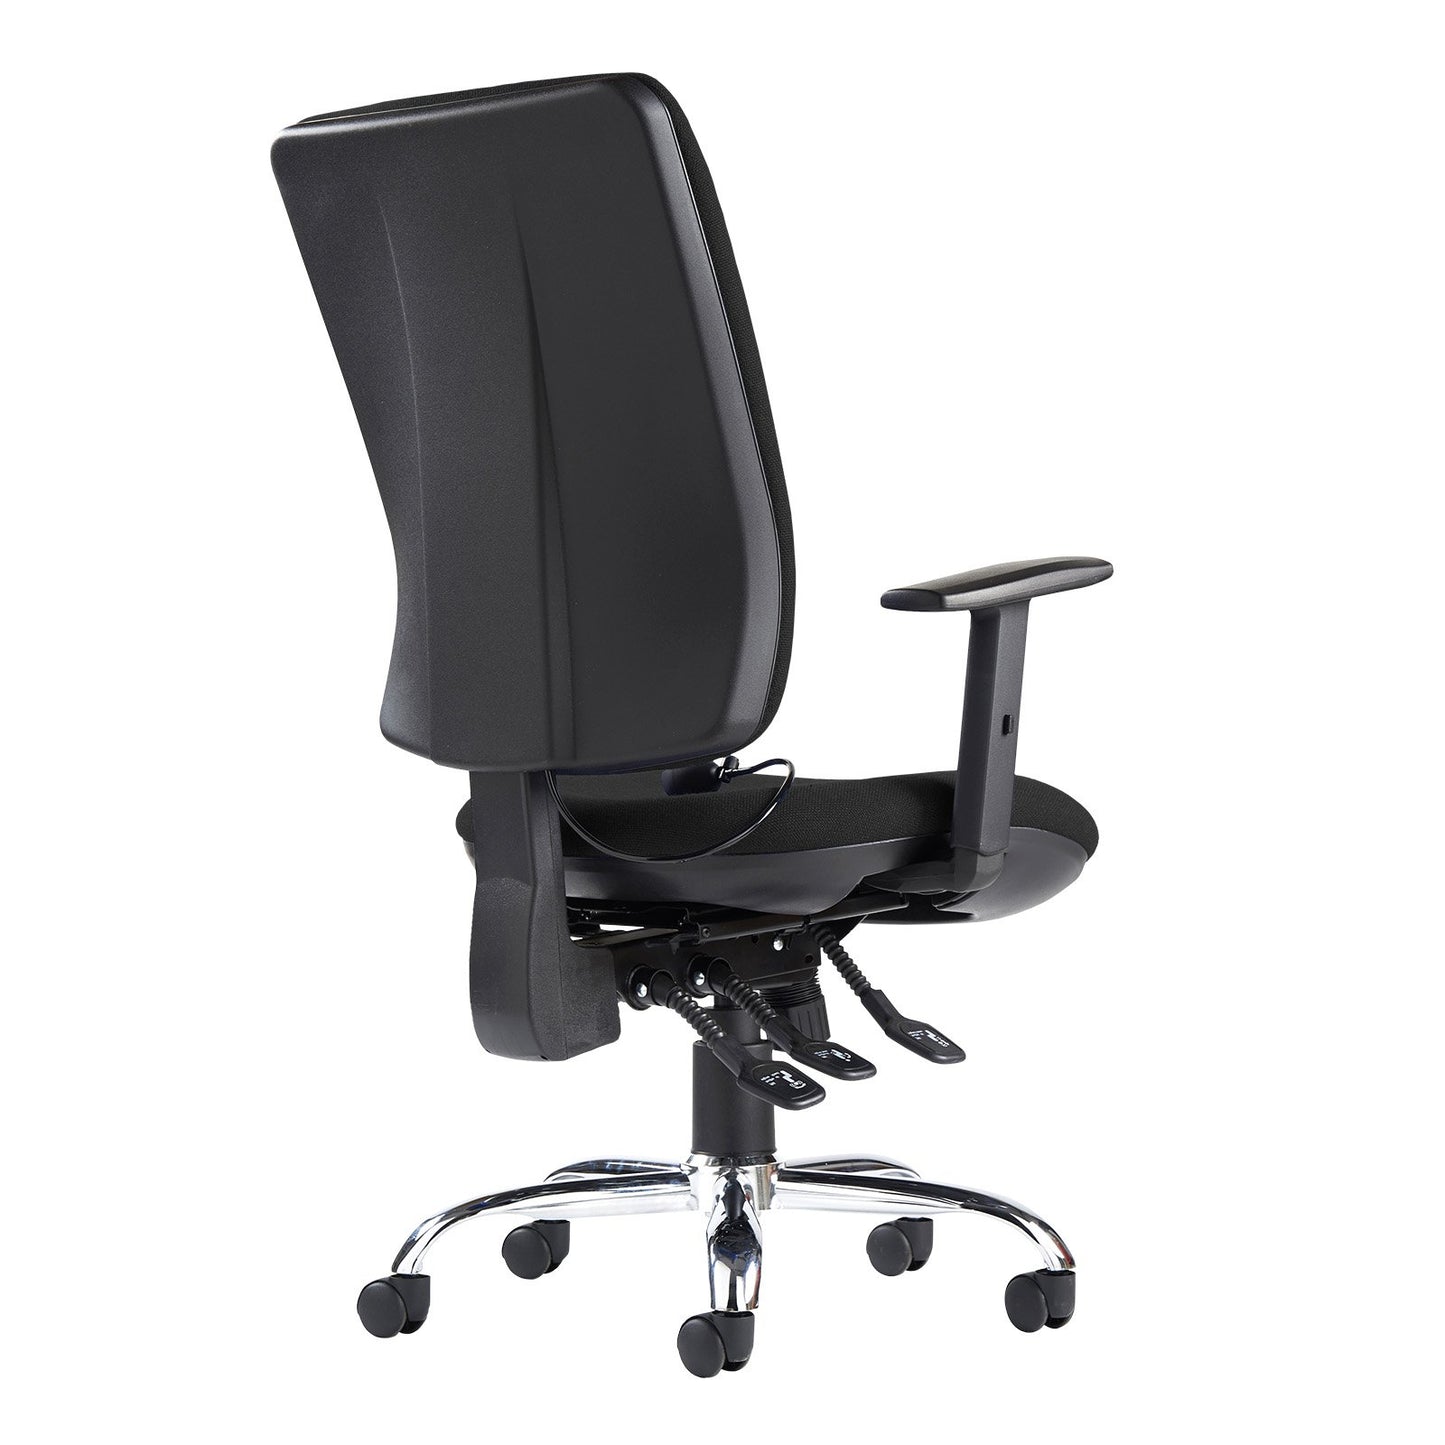 Senza Ergo 24hr ergonomic task chair